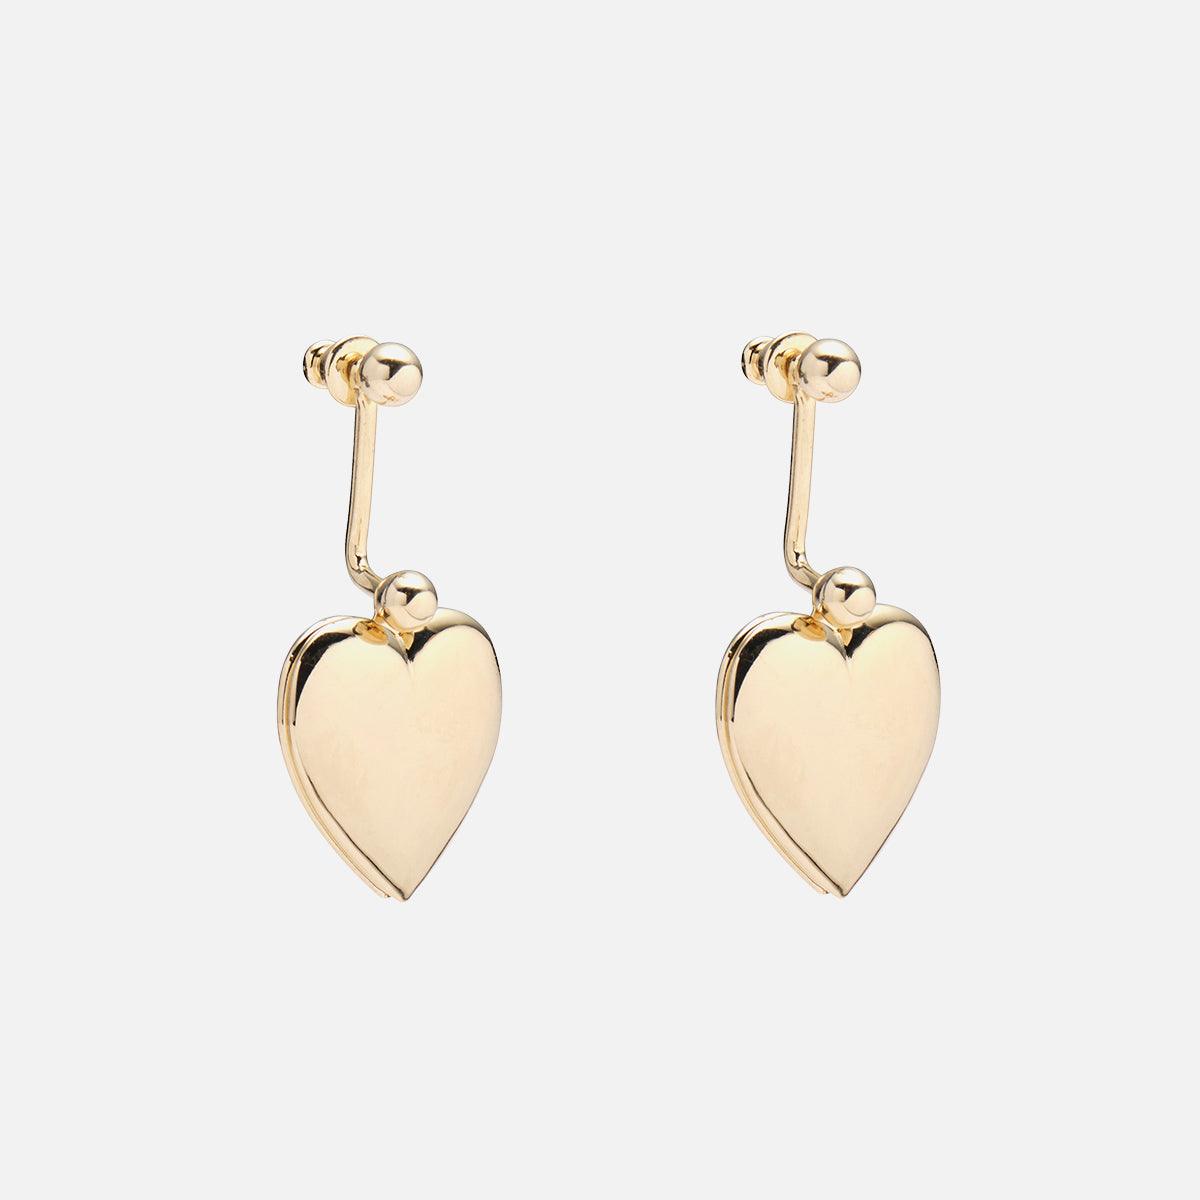 Heart Locket Earrings in Gold - At Present